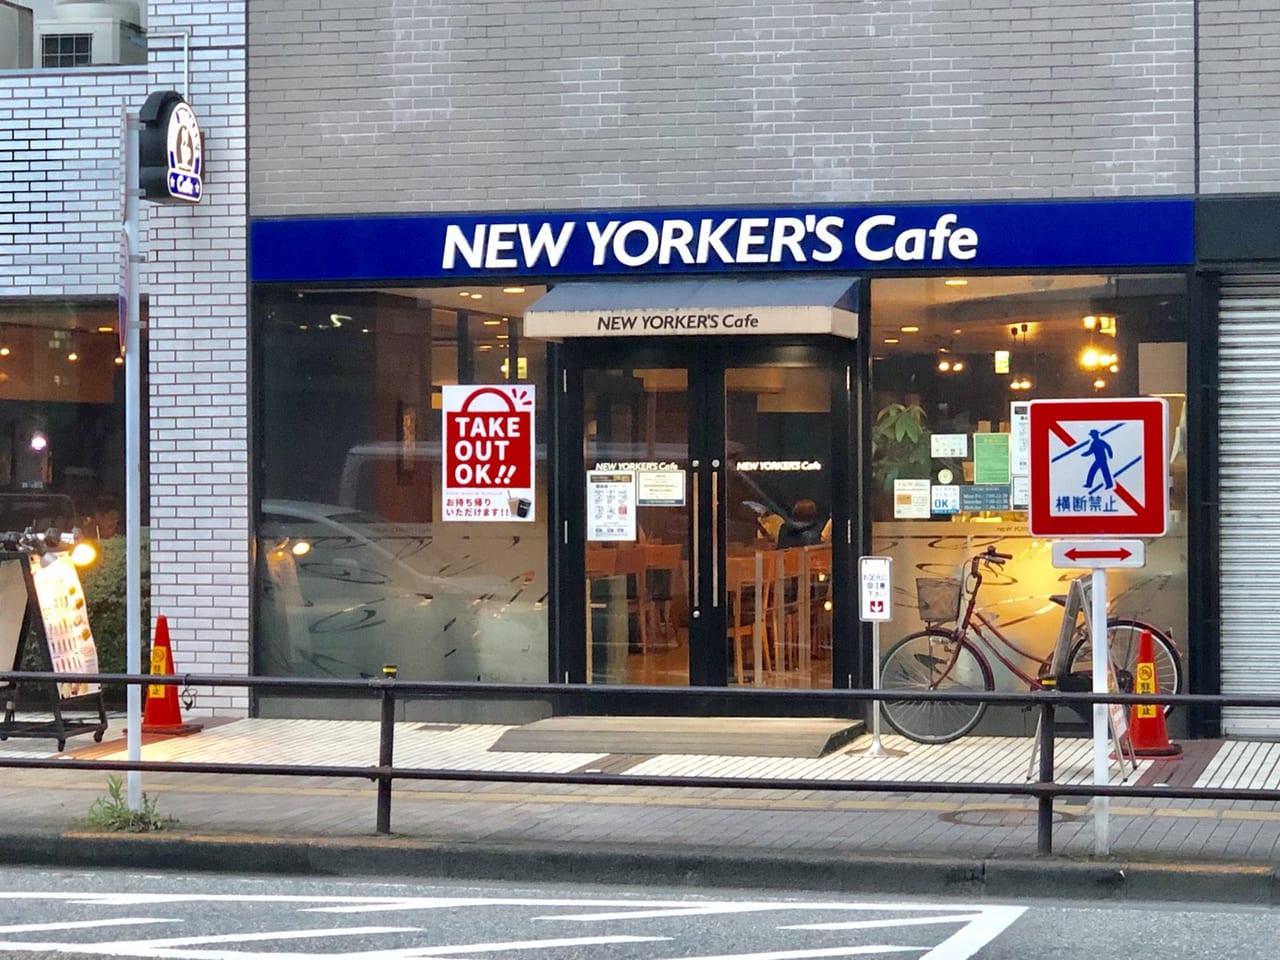 NewYorker's cafe